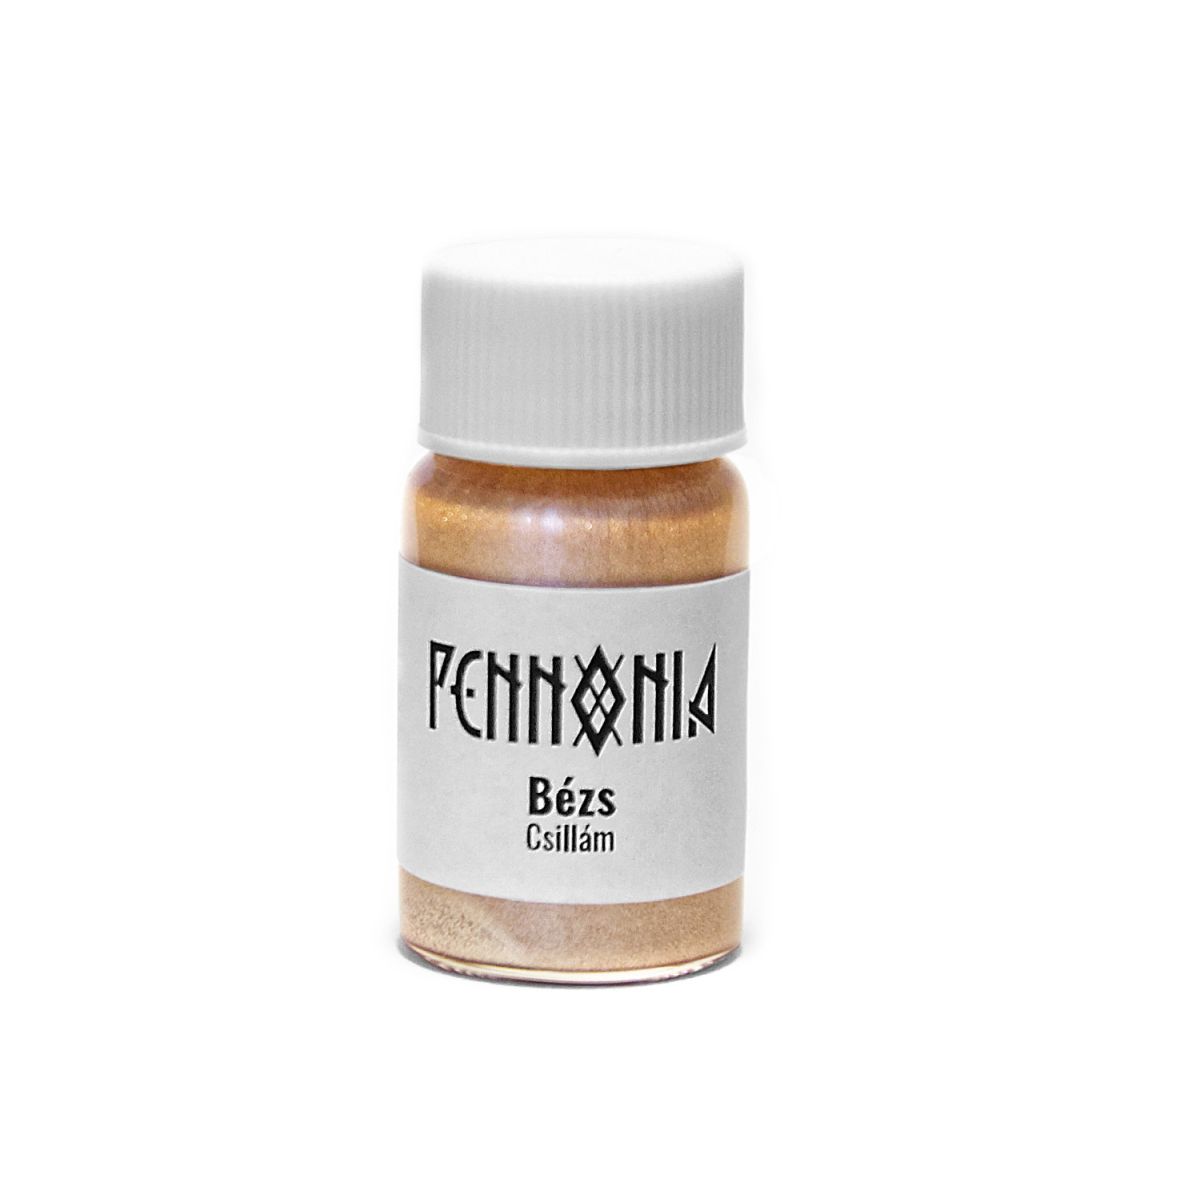 Pennonia shimmer additive - Bezs